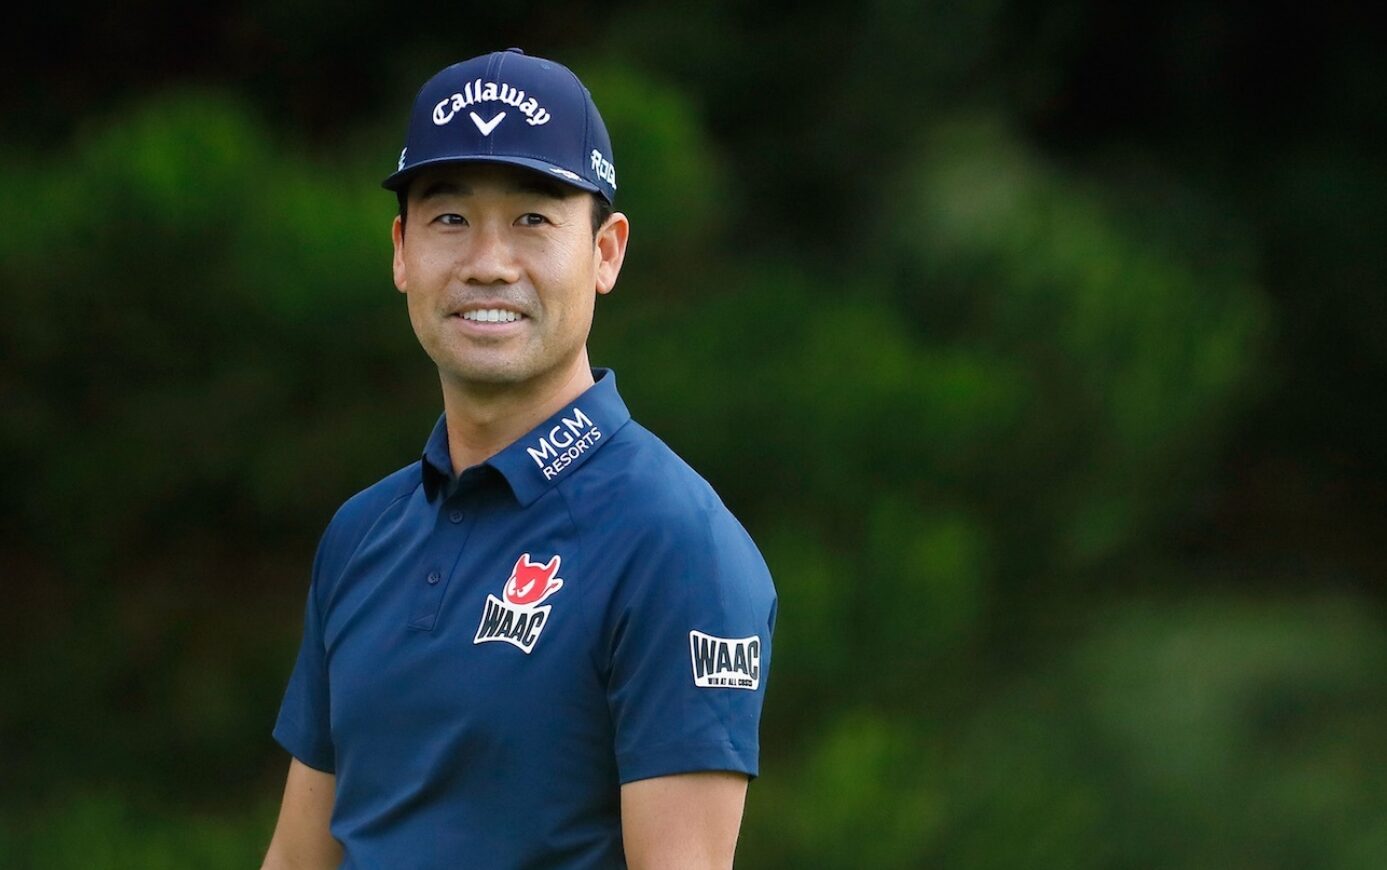 Kevin Na, a Korean American professional golferCOURTESY:Bunkered 